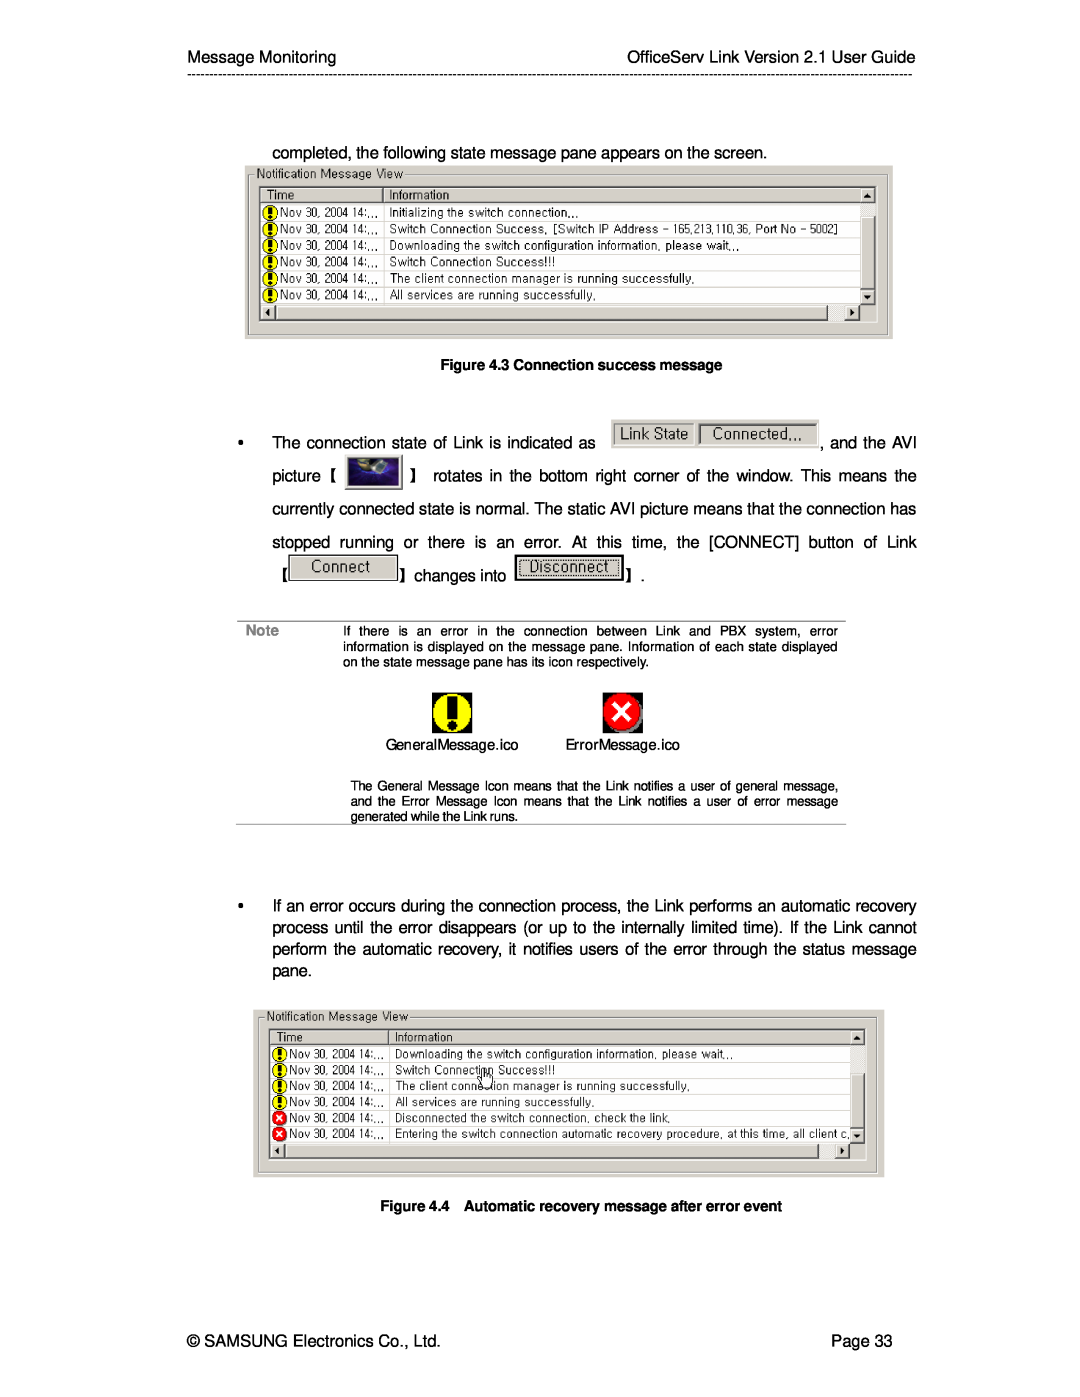 Samsung Version 2.1 manual GeneralMessage.ico ErrorMessage.ico, 3 Connection success message 